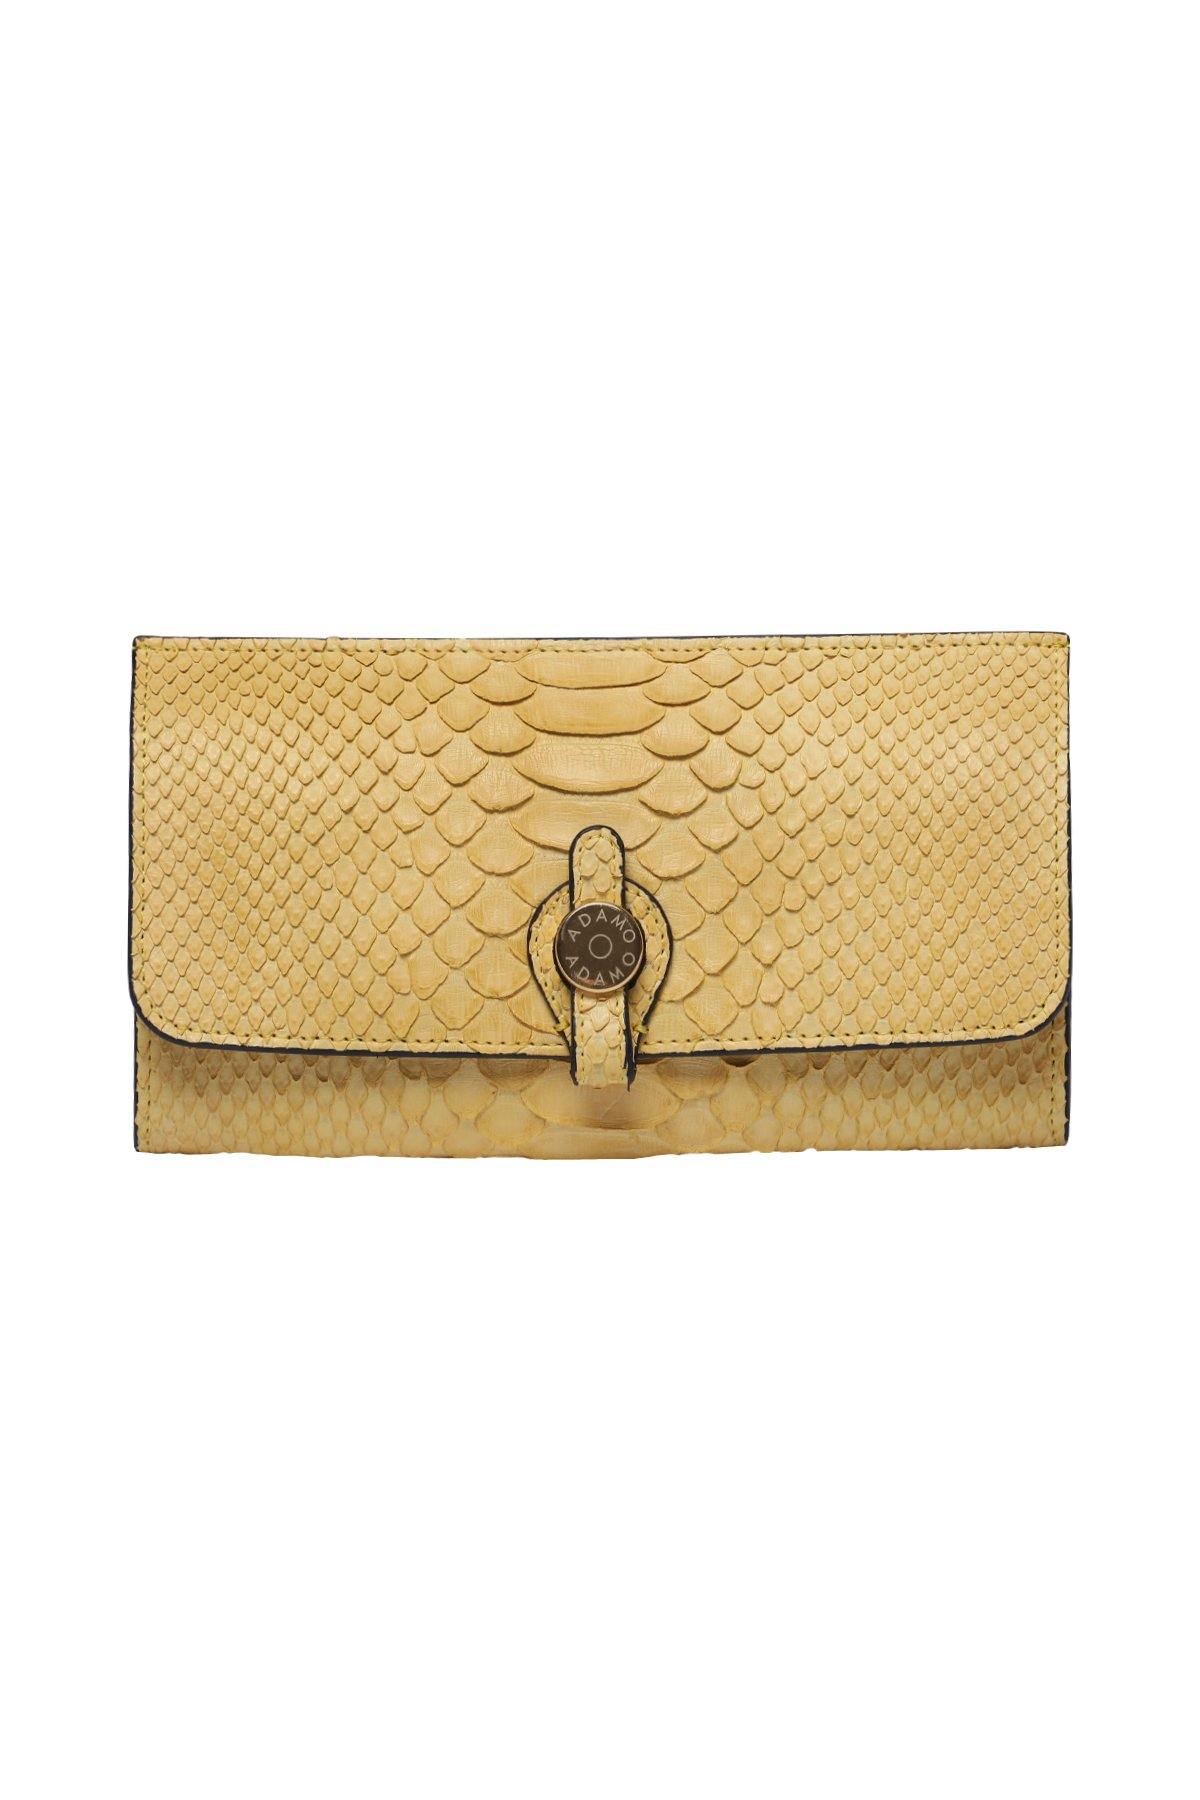 Tassel Wallet Python (Pre Order) - Shop Snakeskin Handbags